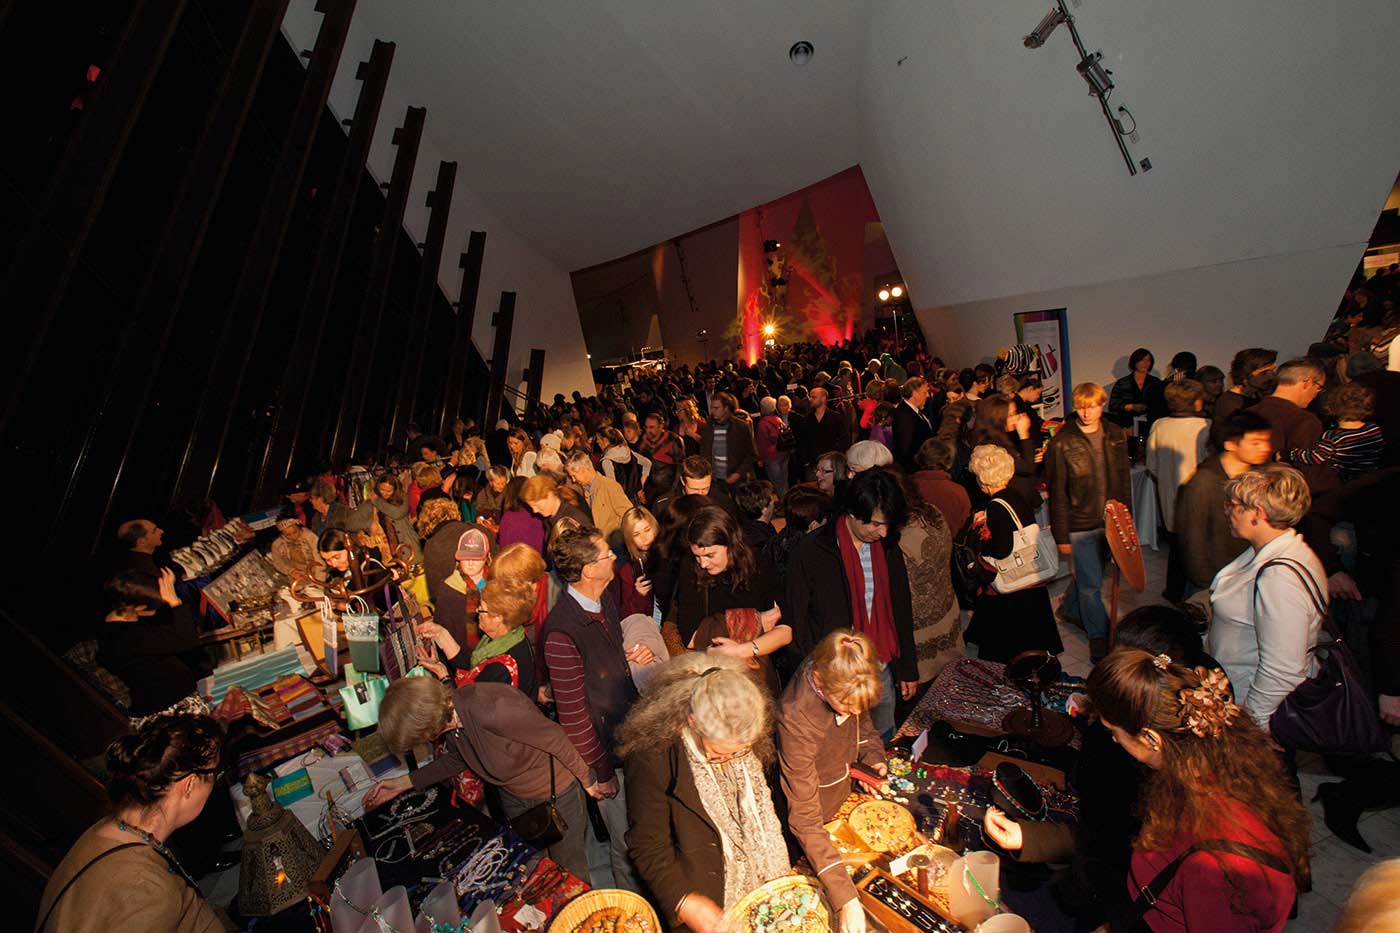 A photograph of a crowd attending a market inside a building.